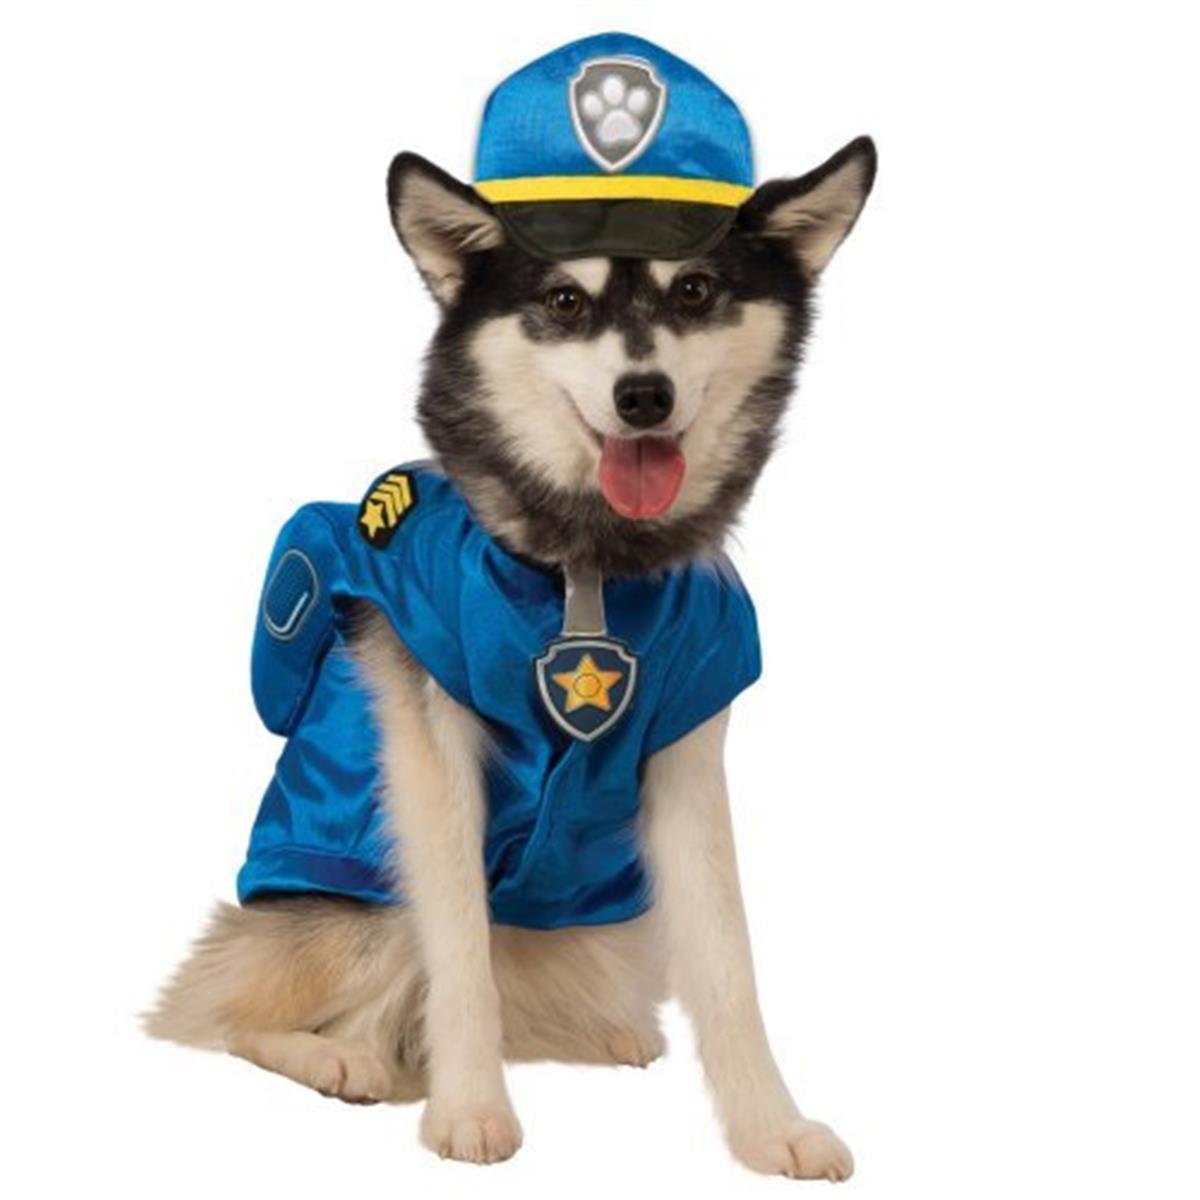 245922 Paw Patrol Chase Pet Costume